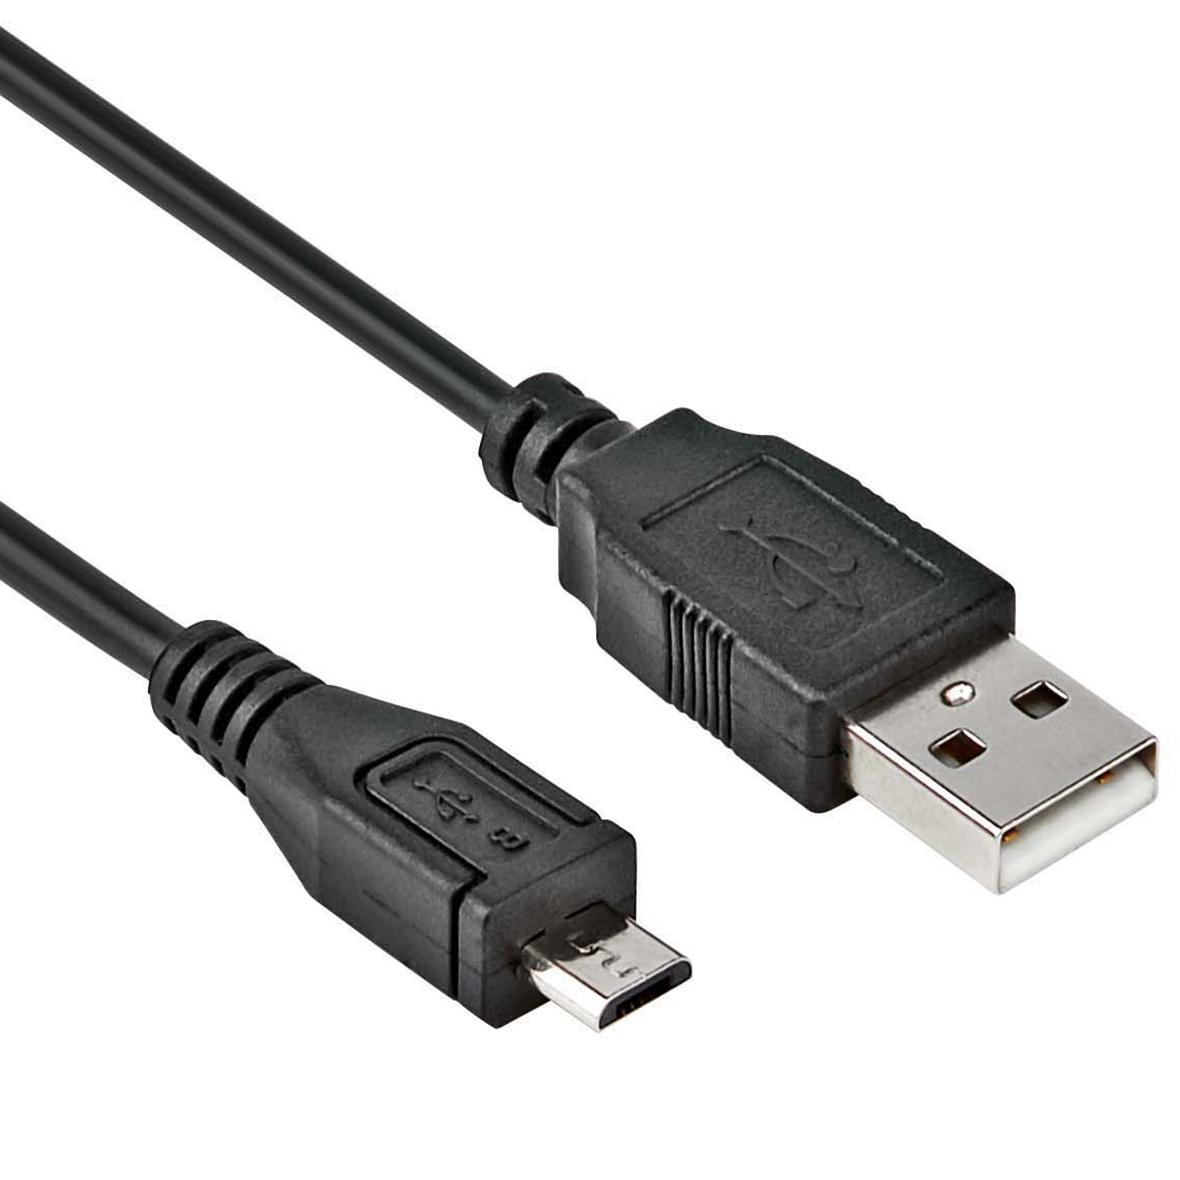 Asus - Micro USB kabel - 1.8 meter - Allteq